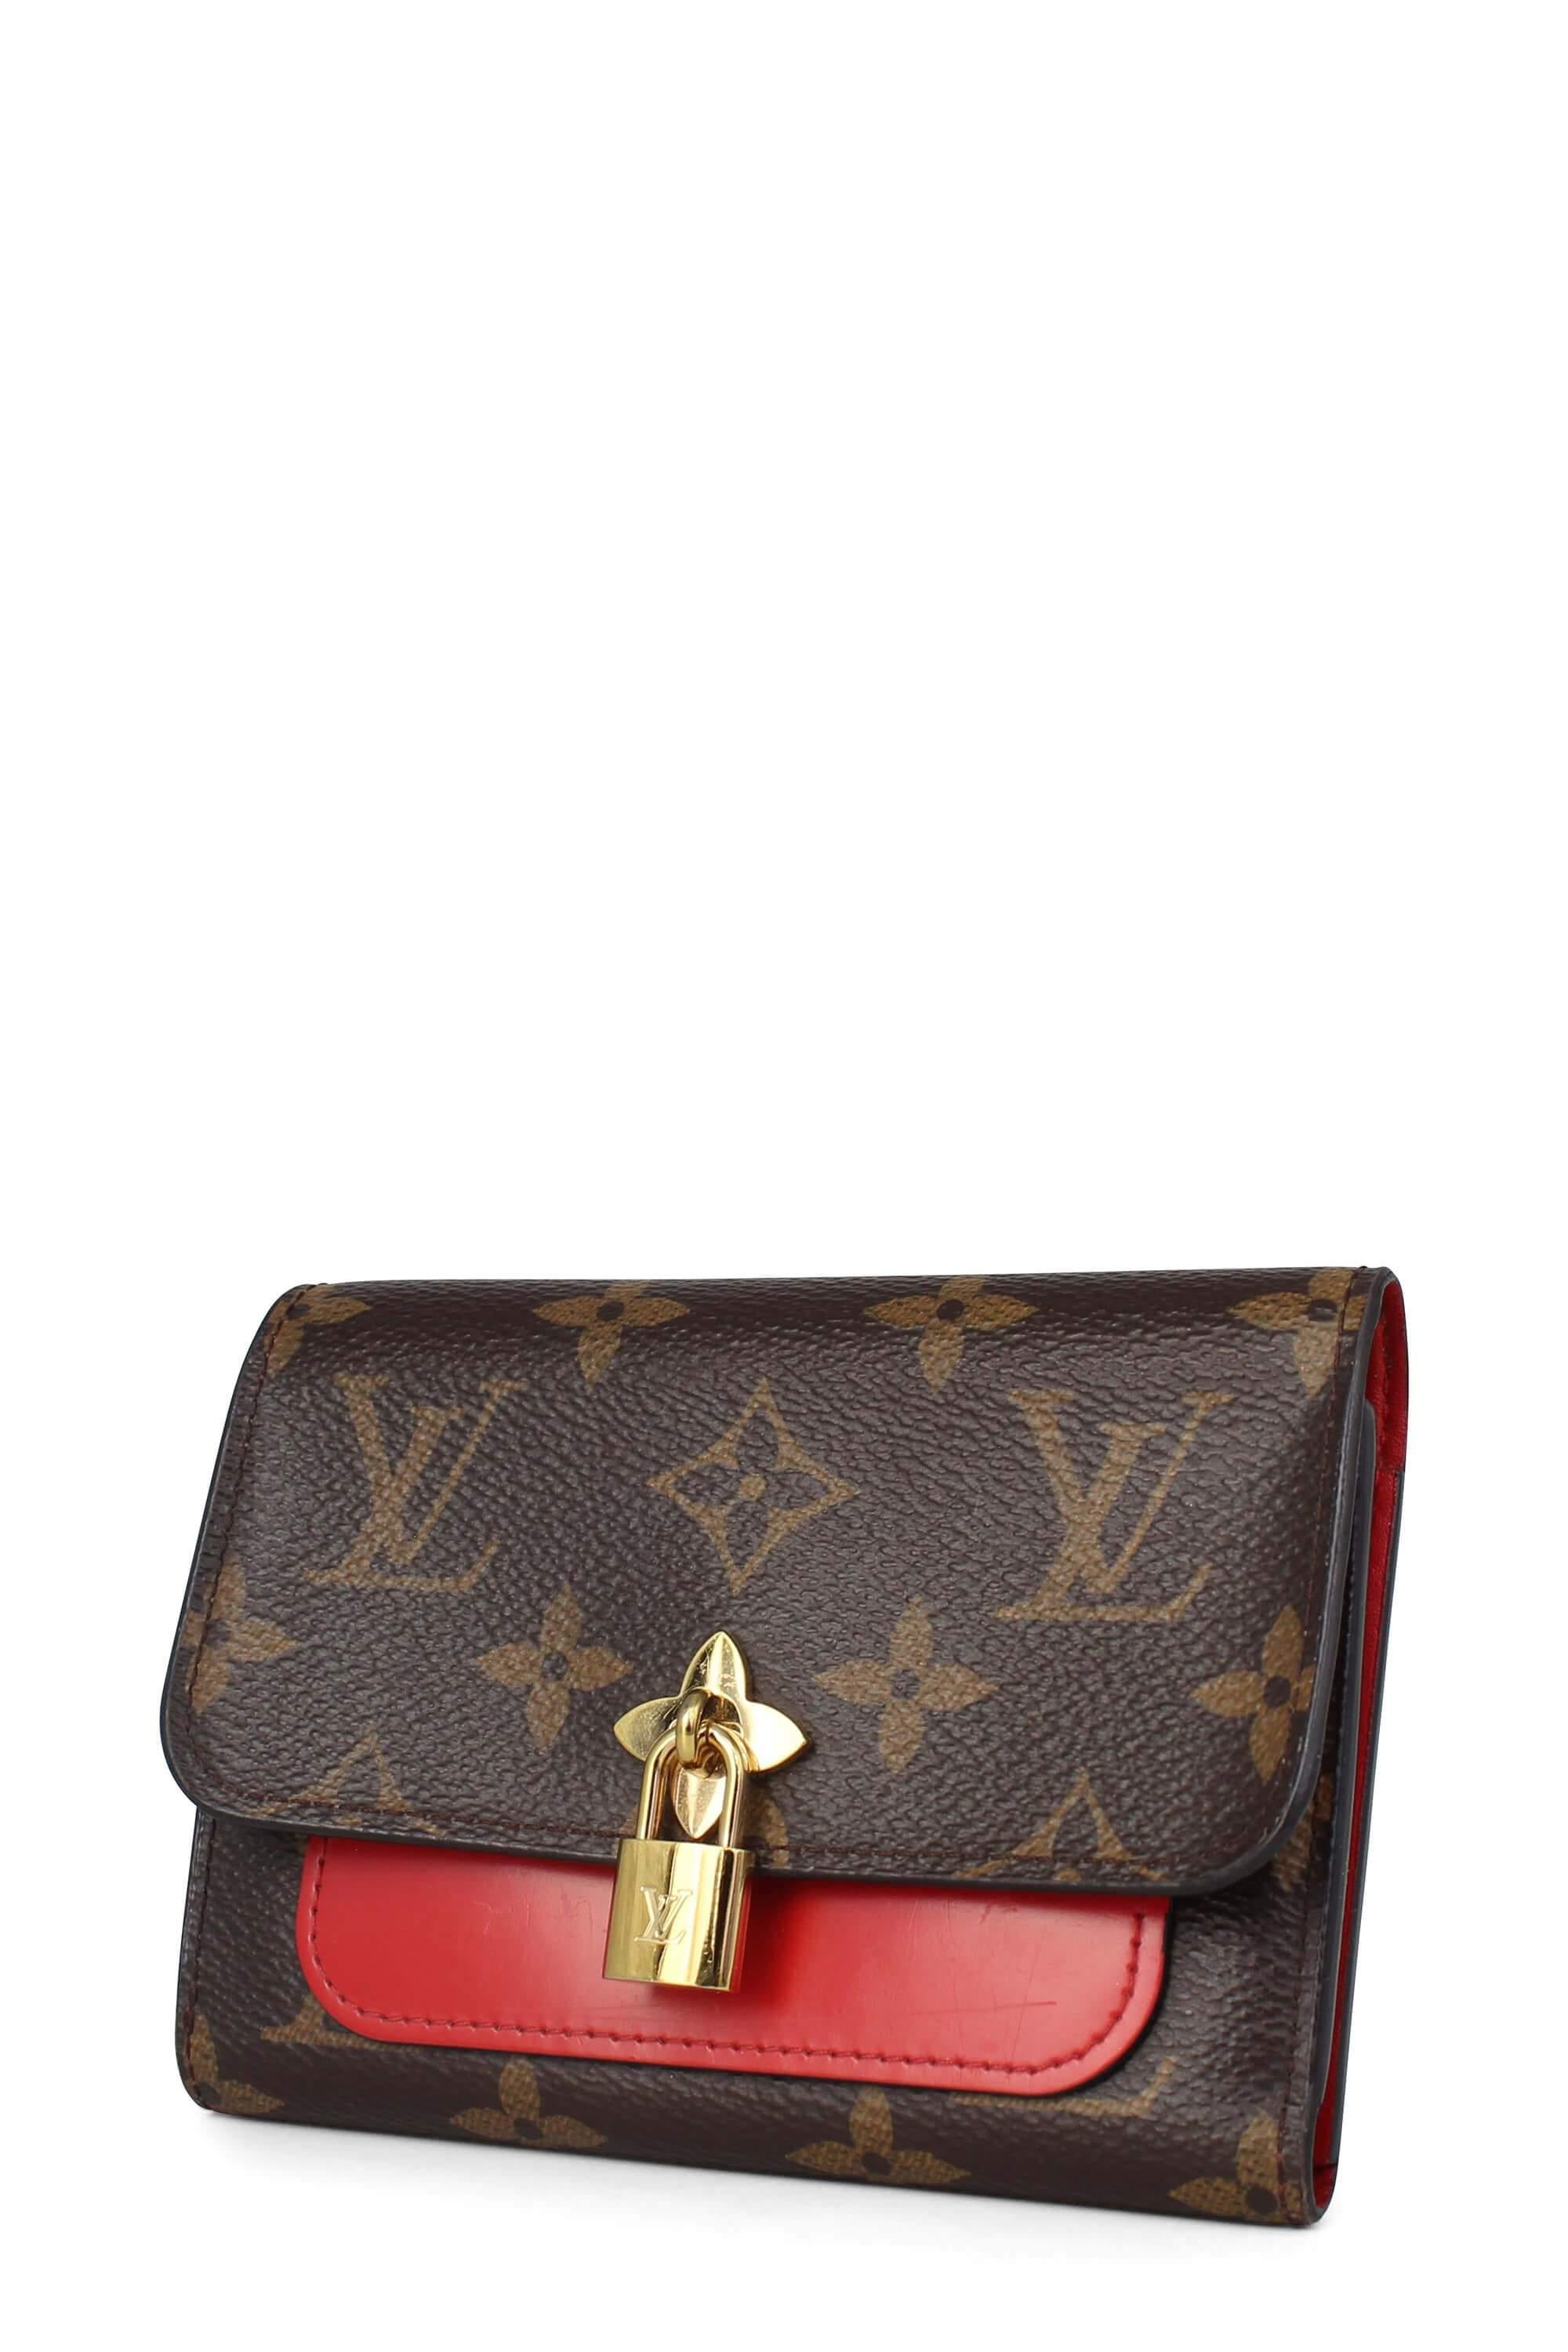 Louis Vuitton Women's Compact Wallet